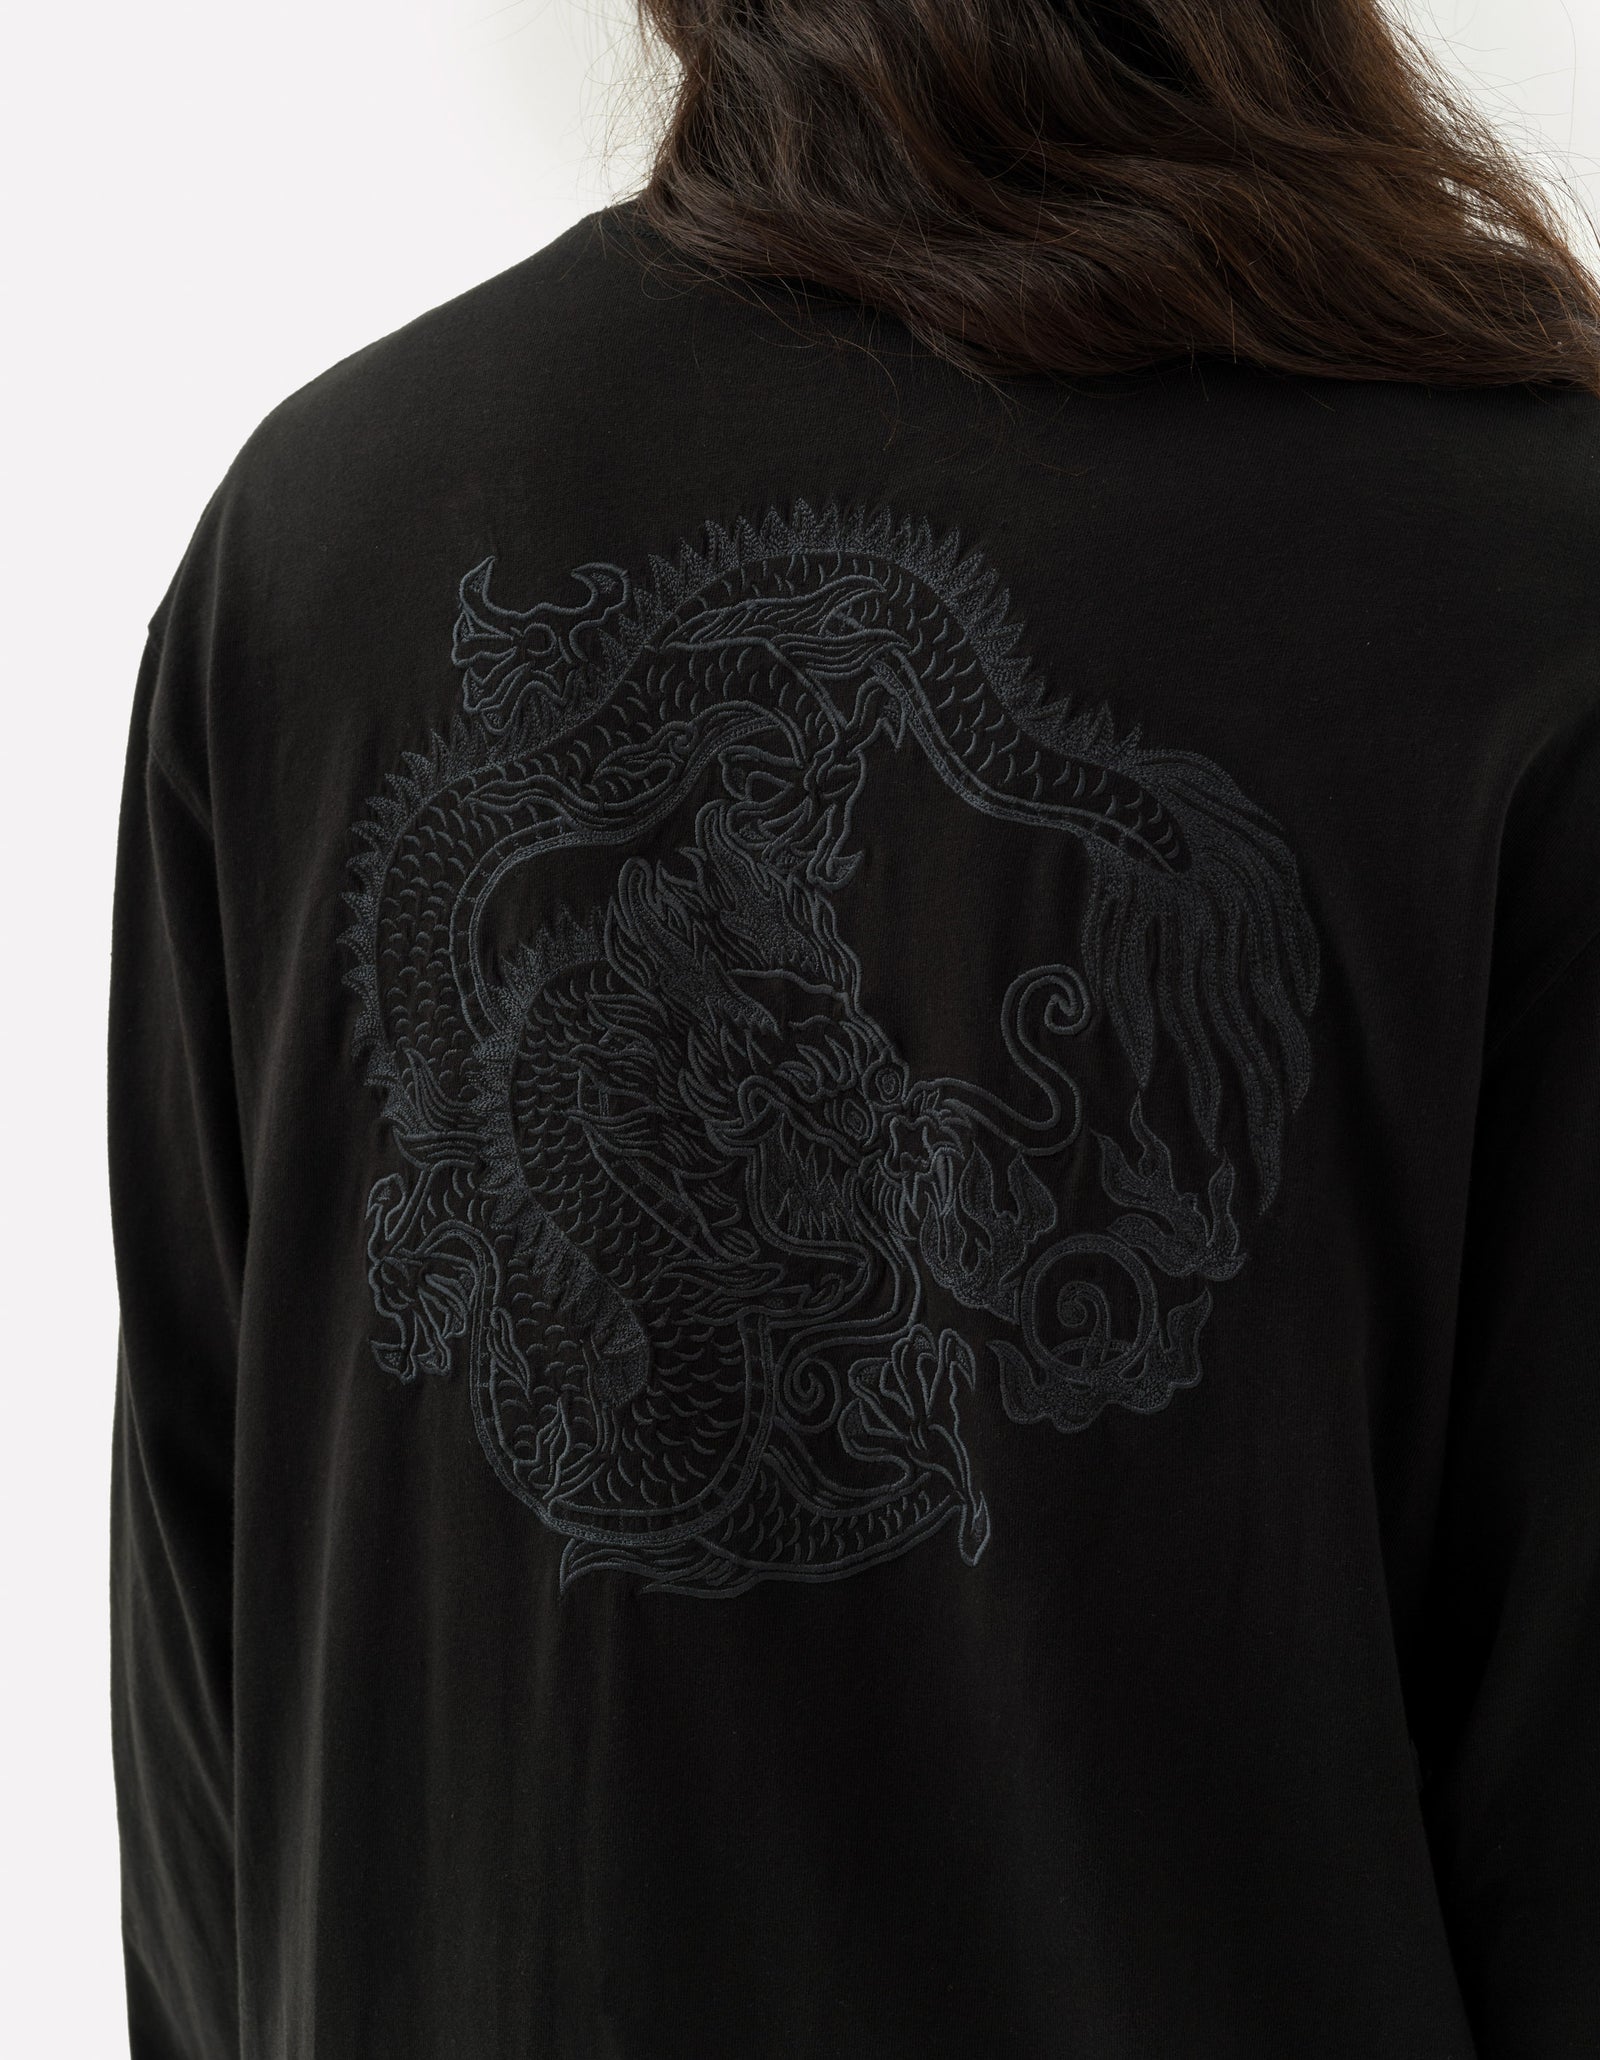 5243 Thar Dragon L/S T-Shirt Black